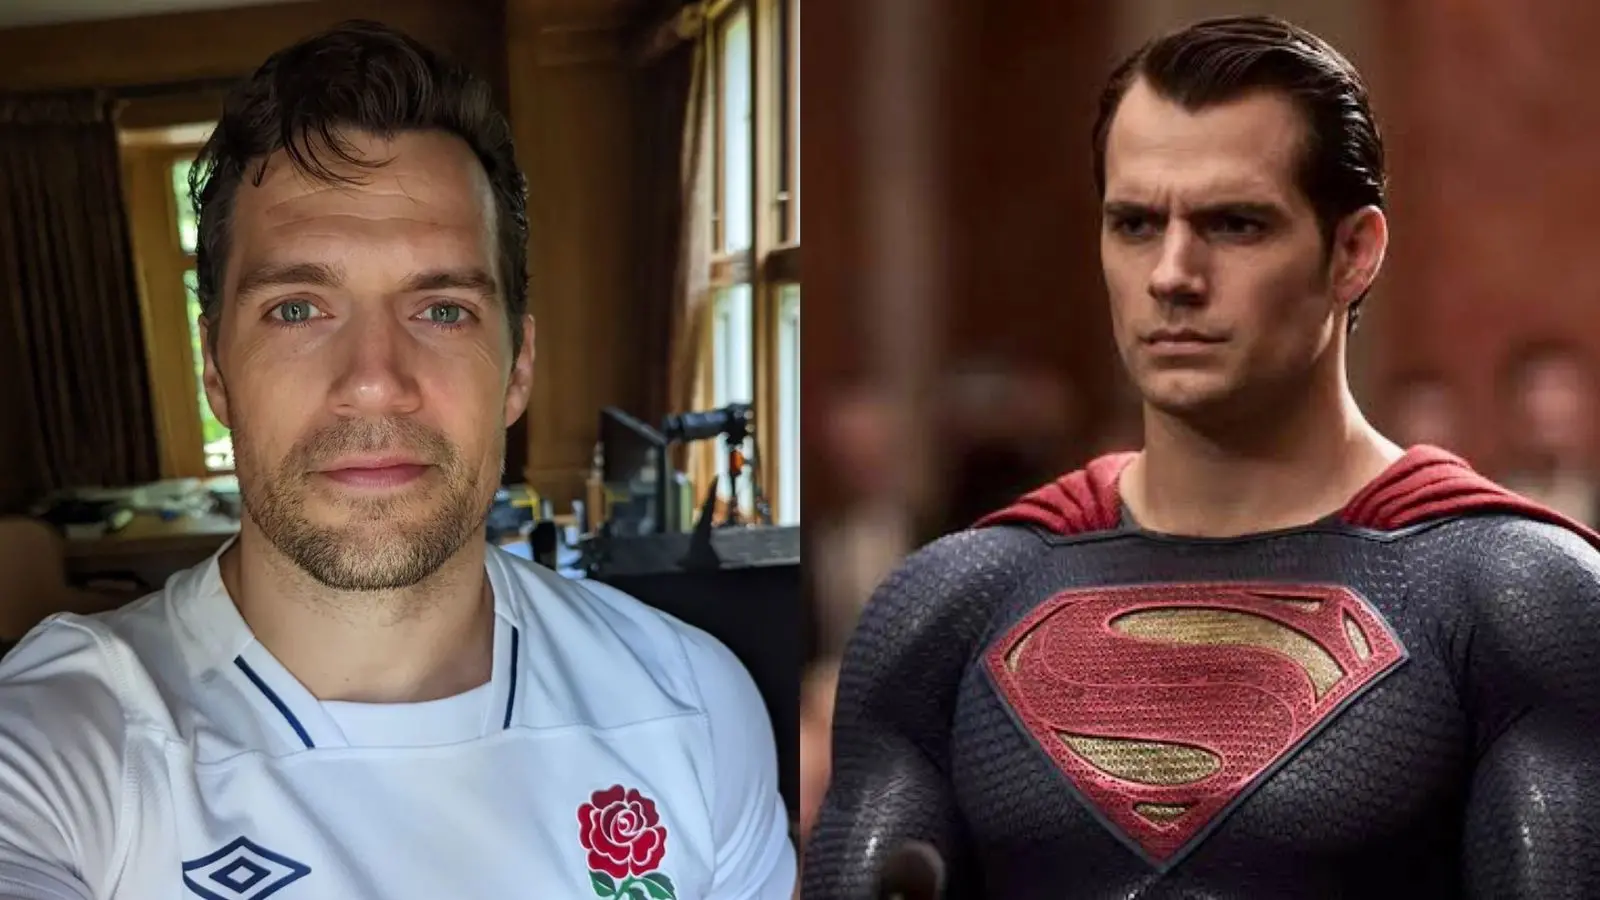 Vídeo: Henry Cavill confirma retorno ao papel de Superman